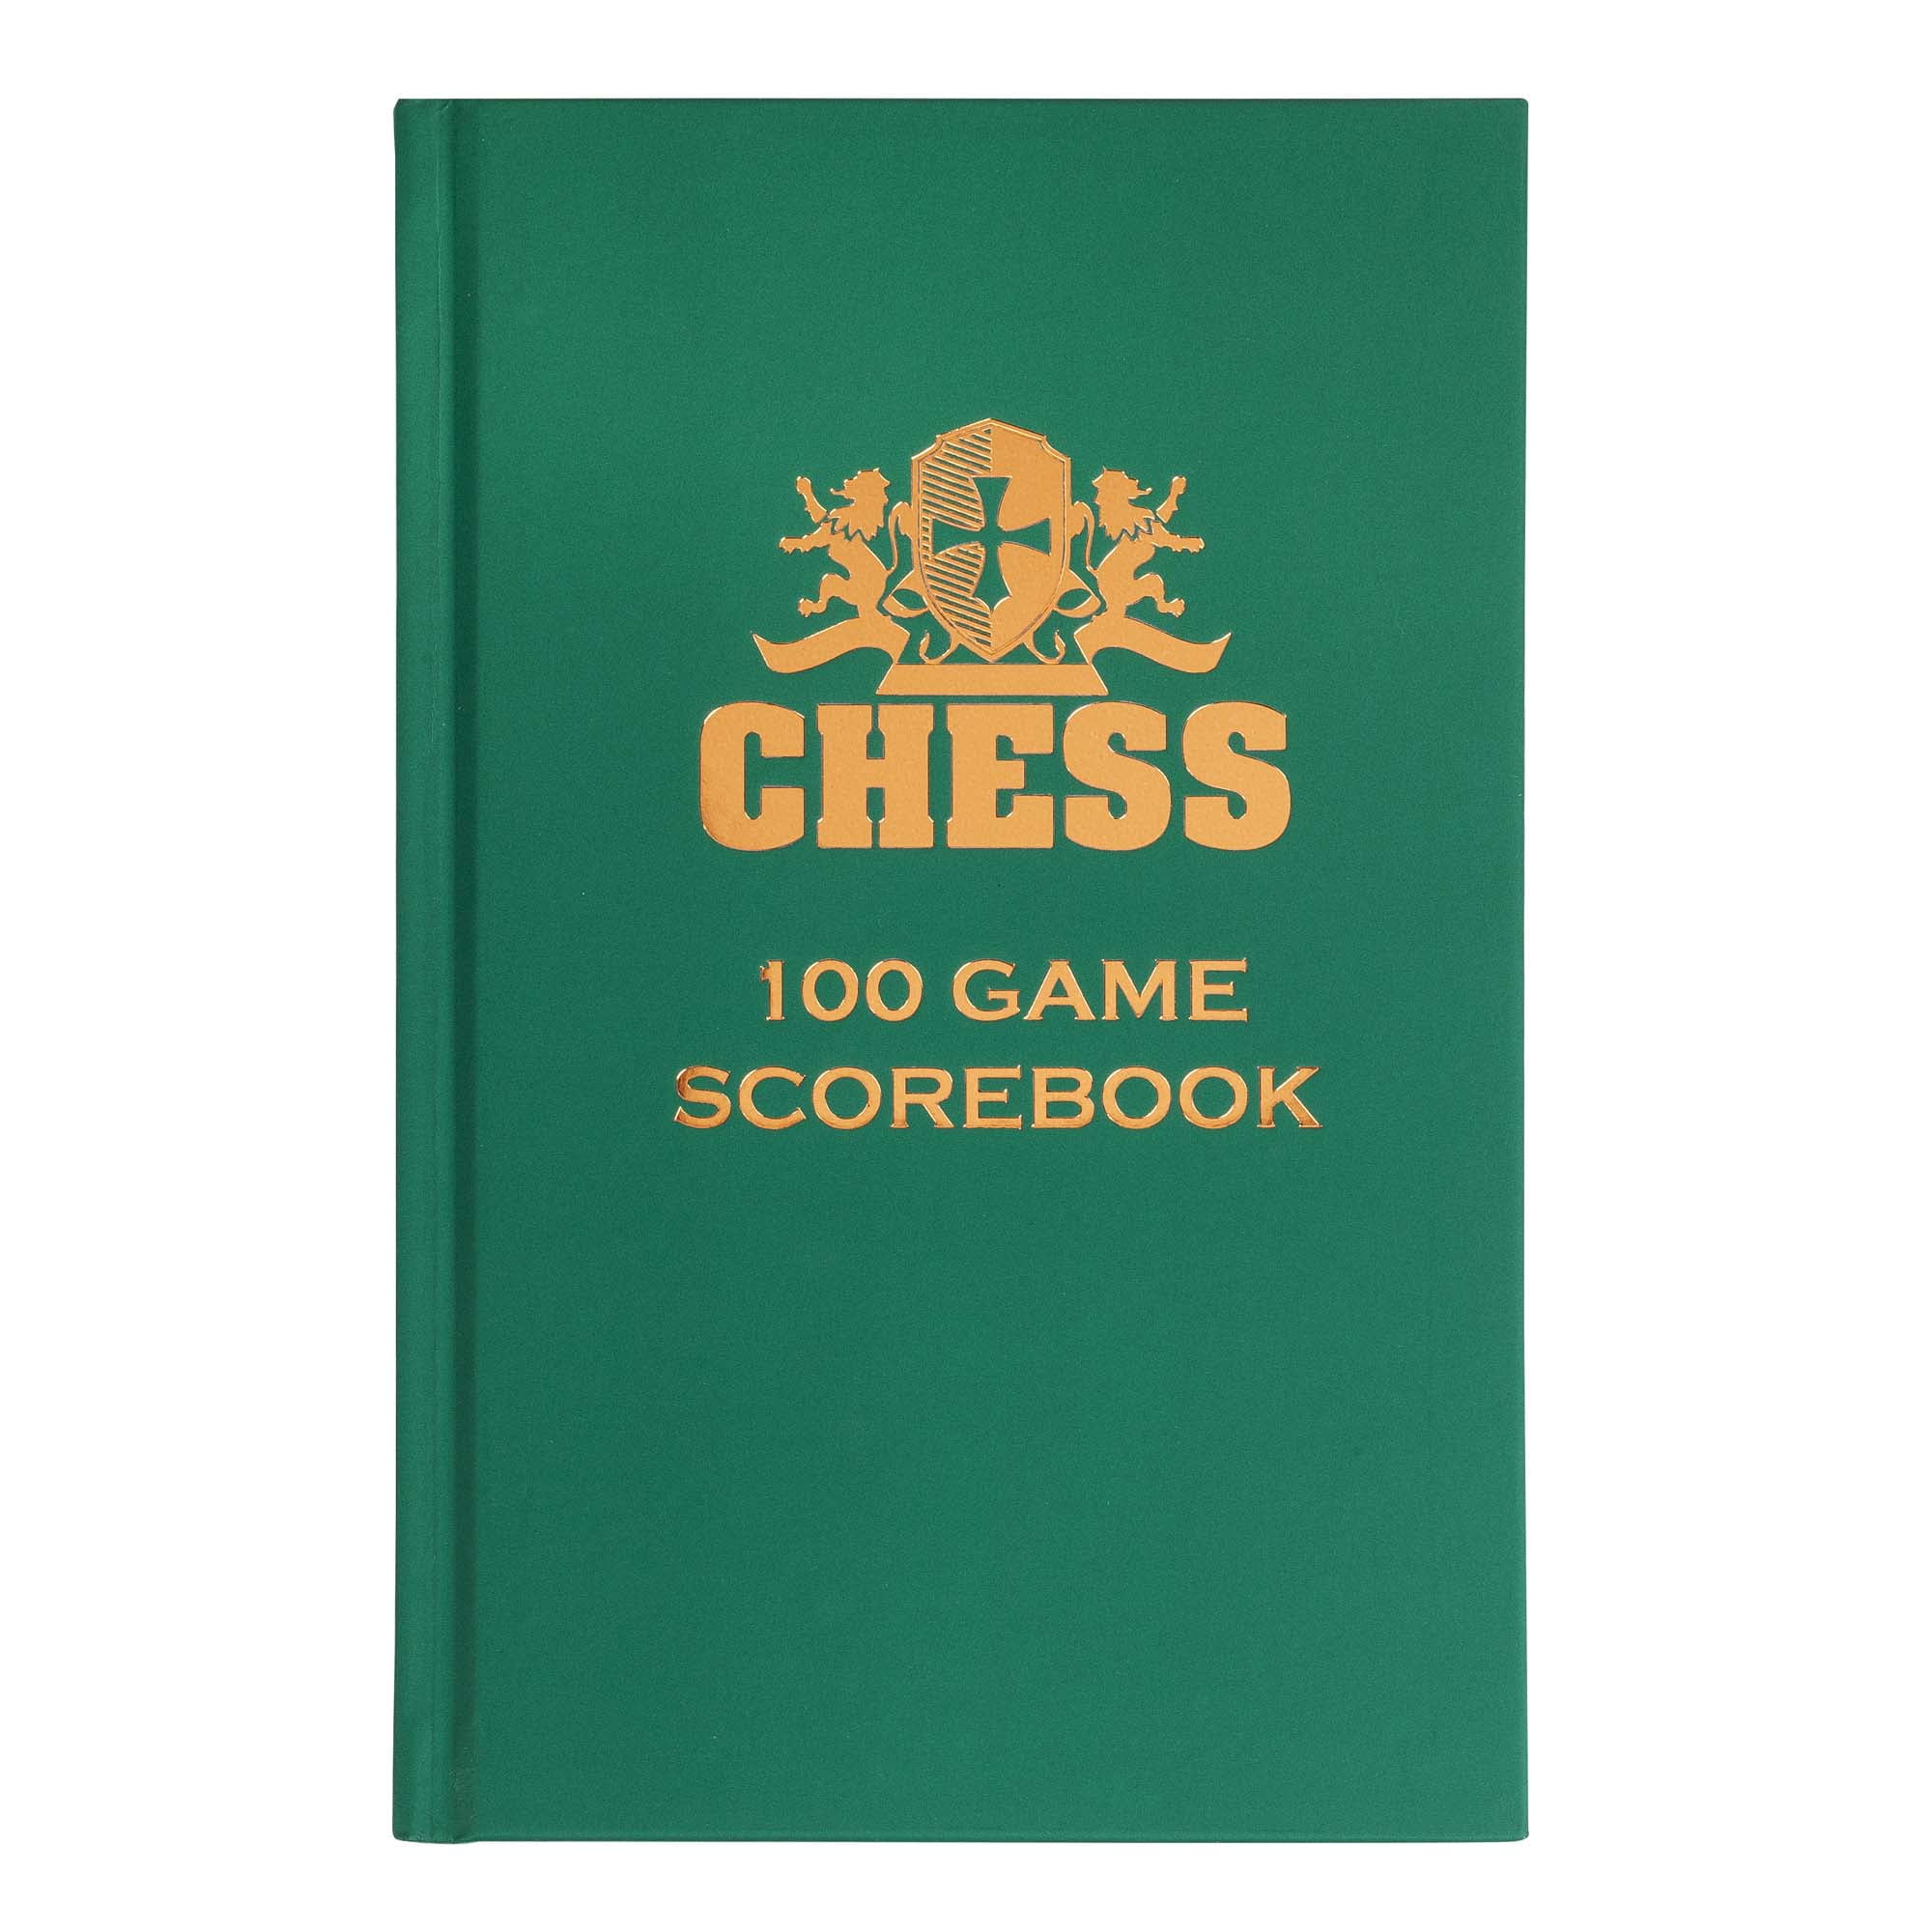 HARDCOVER CHESS SCOREBOOK MADE IN USA 100 GAMES ORANGE 